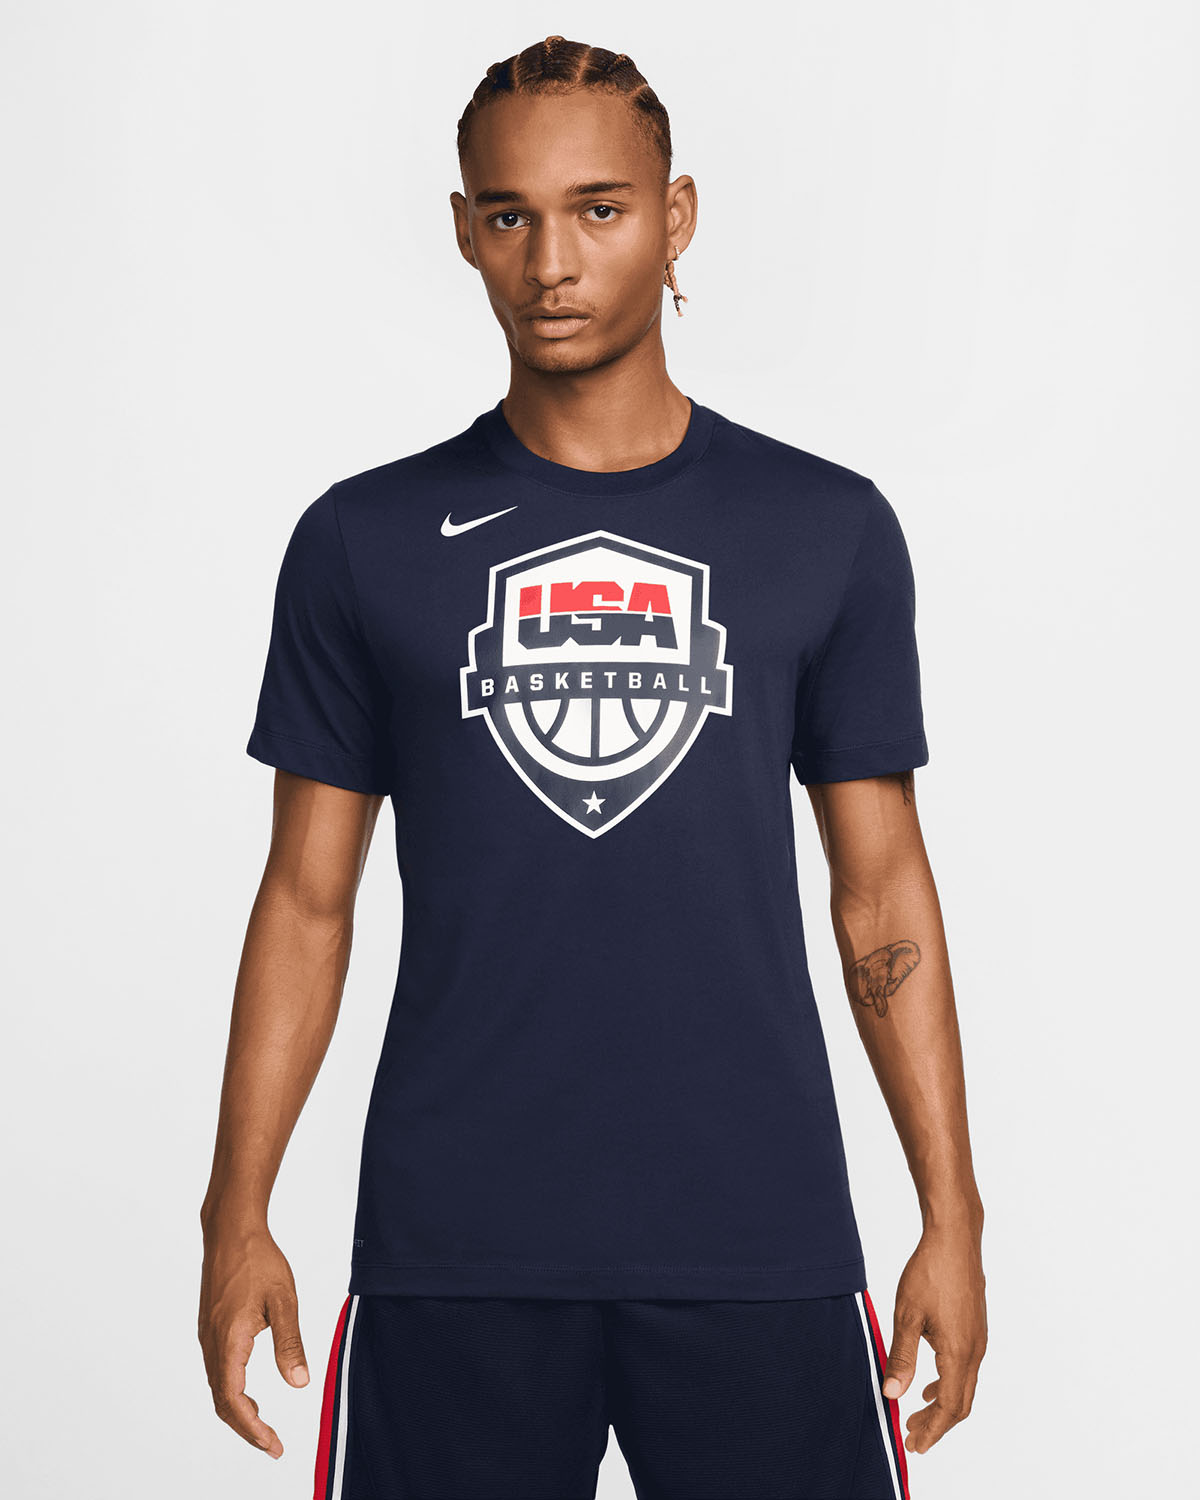 Nike USA Basketball T Shirt Obsidian